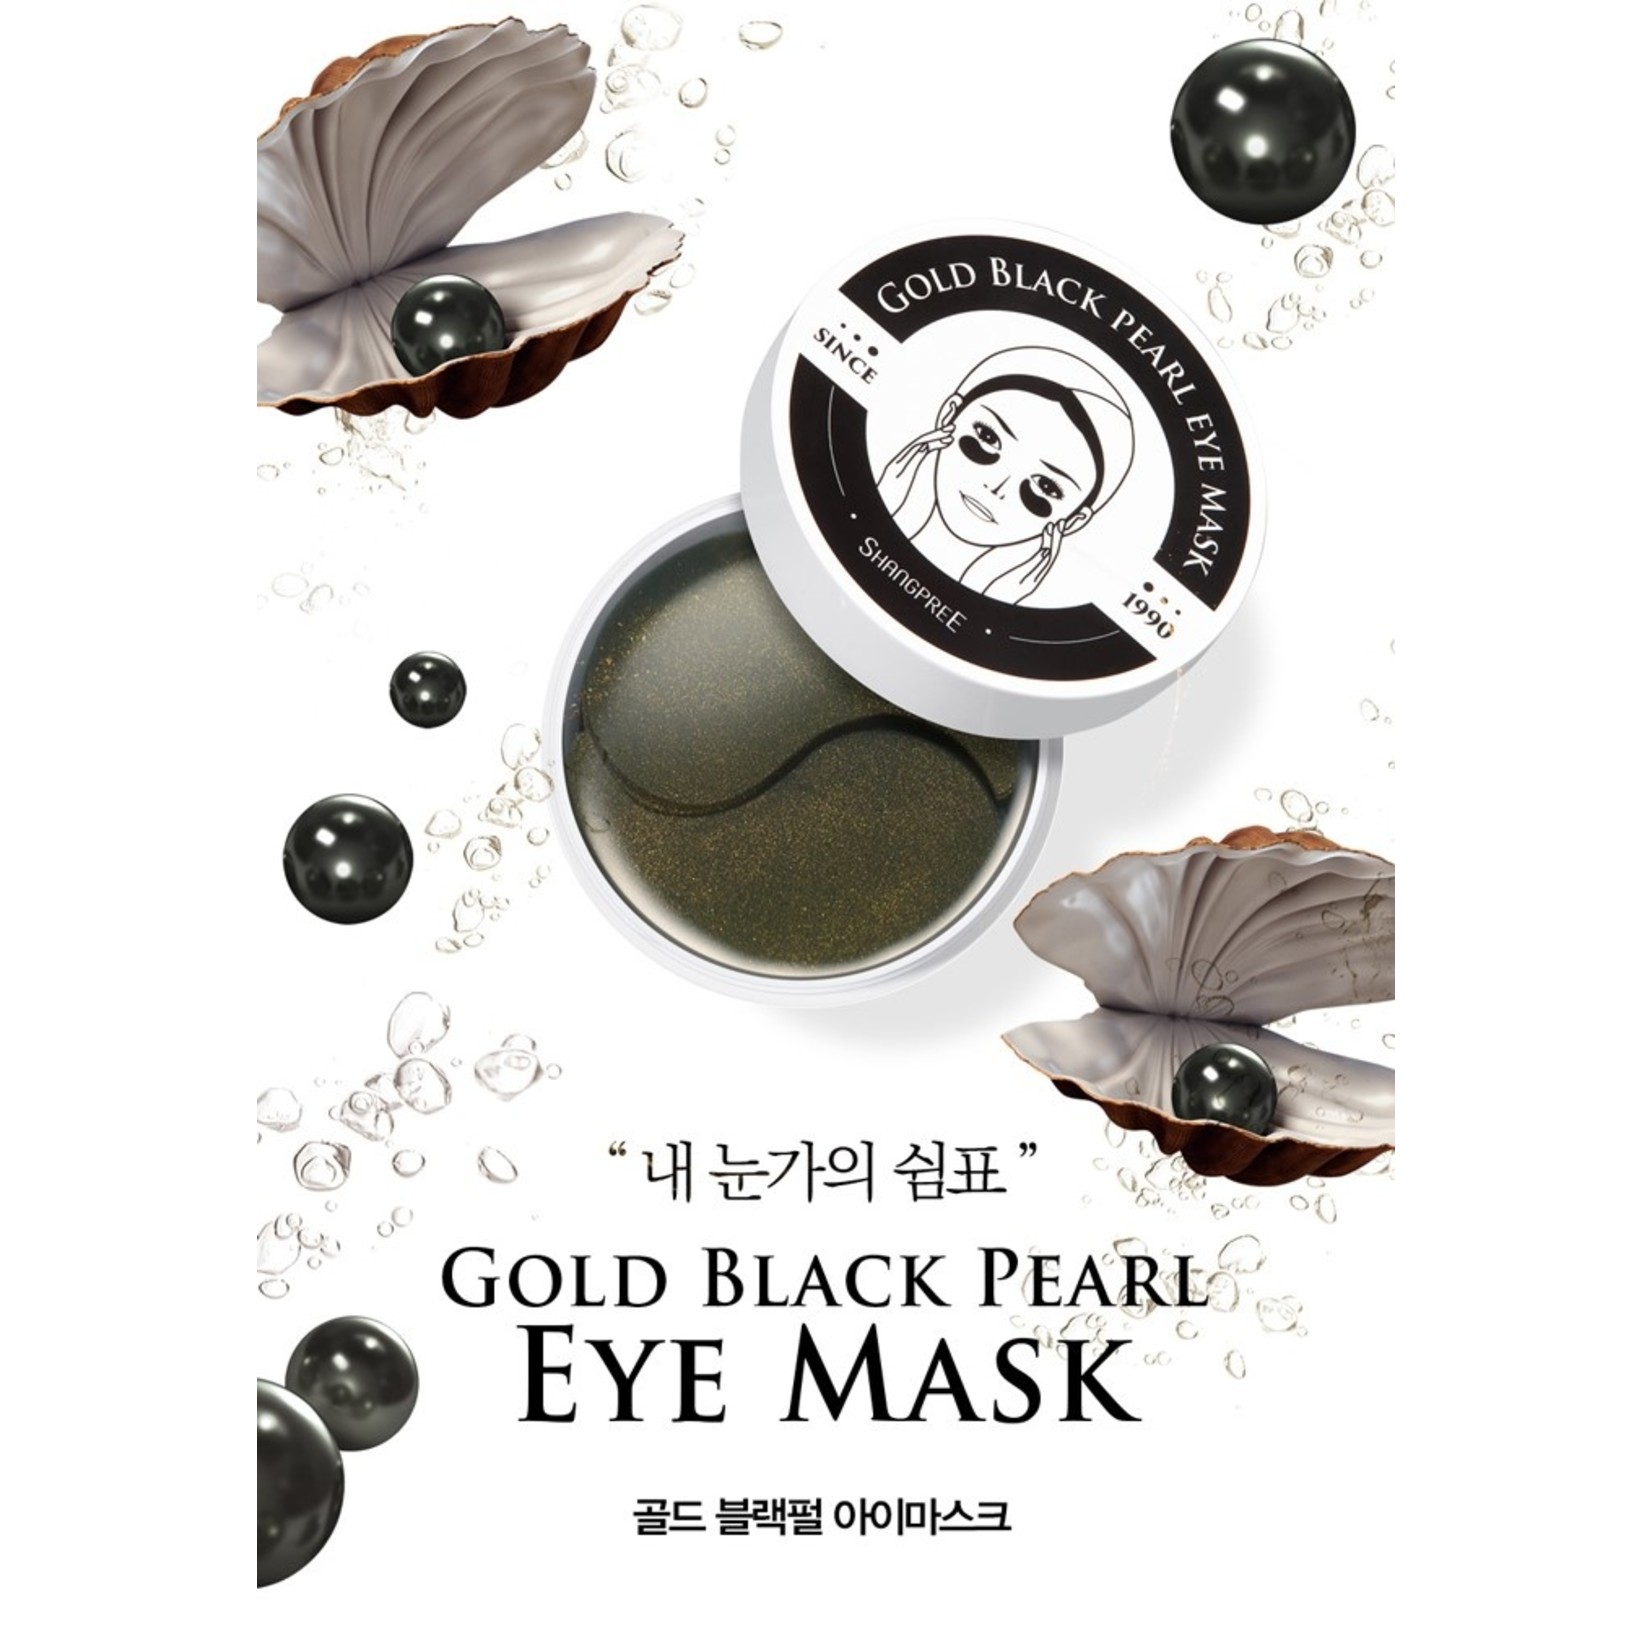 Gold Black Pearl Eye Mask